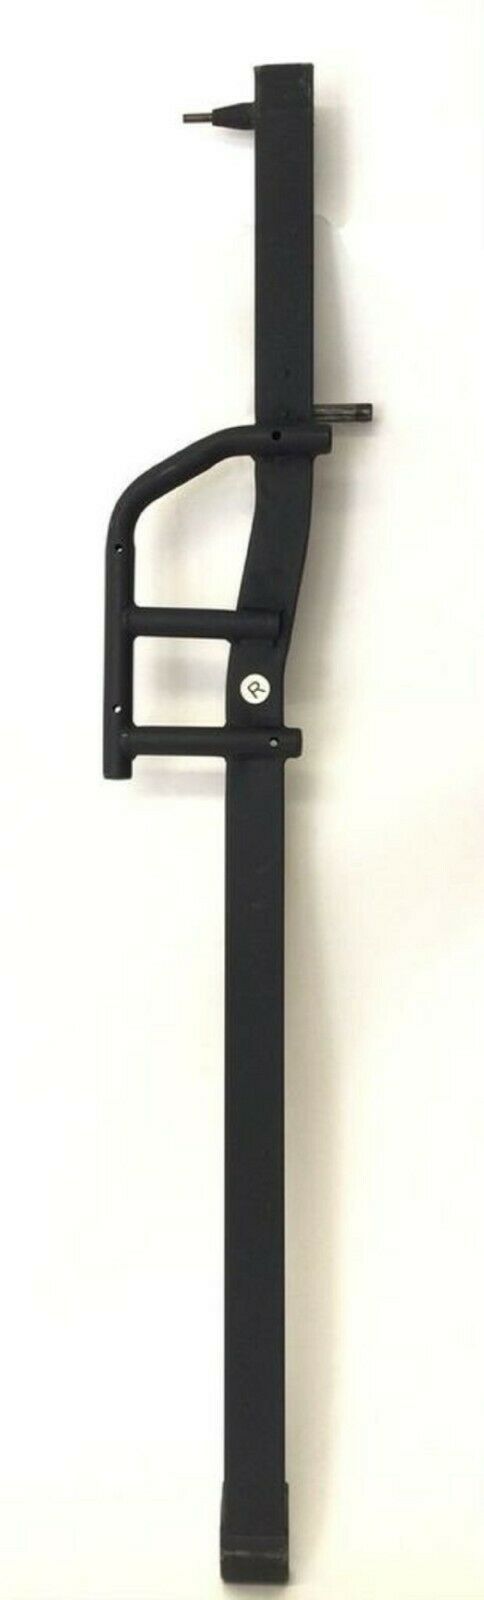 NordicTrack Proform Reebok Elliptical Right Pedal Arm 268752 - fitnesspartsrepair